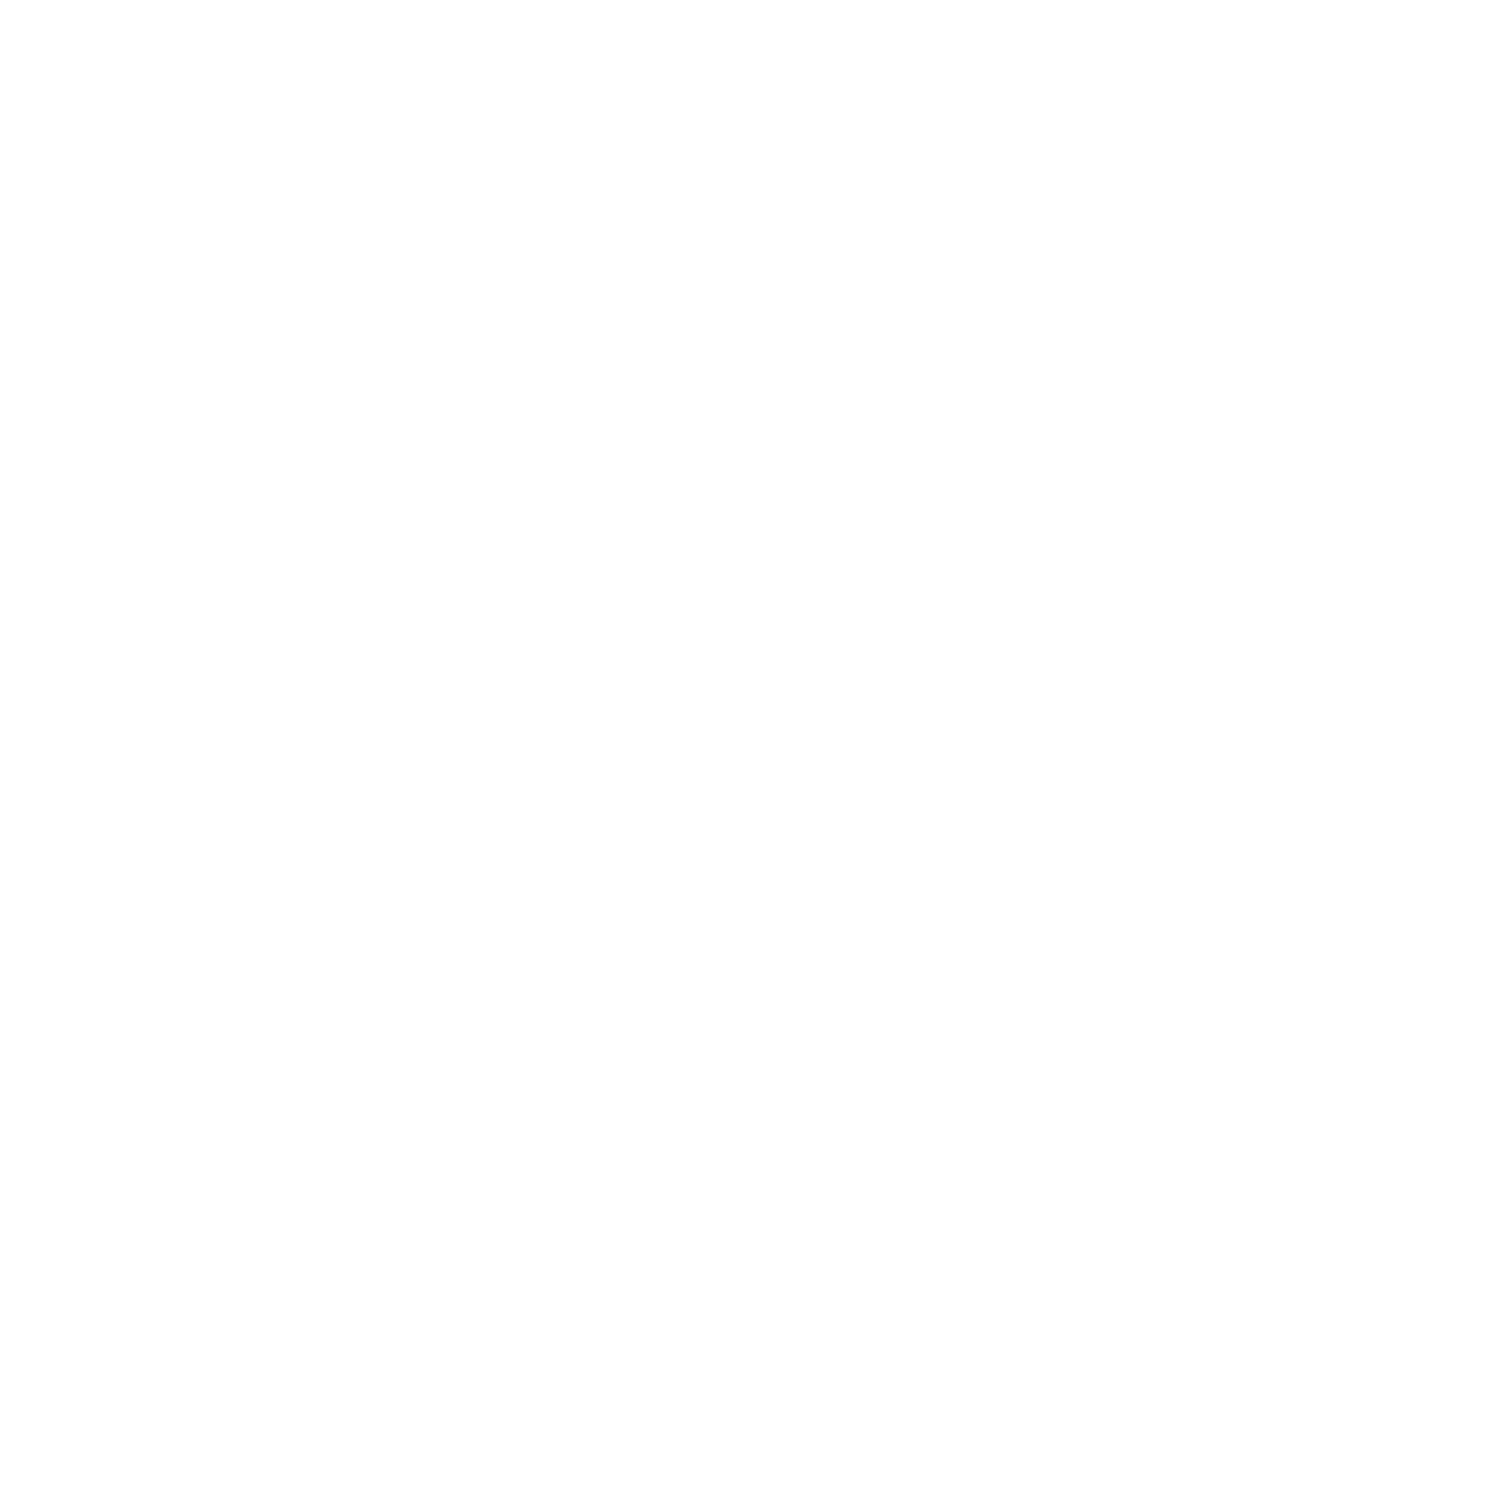 chiba bar stacked white